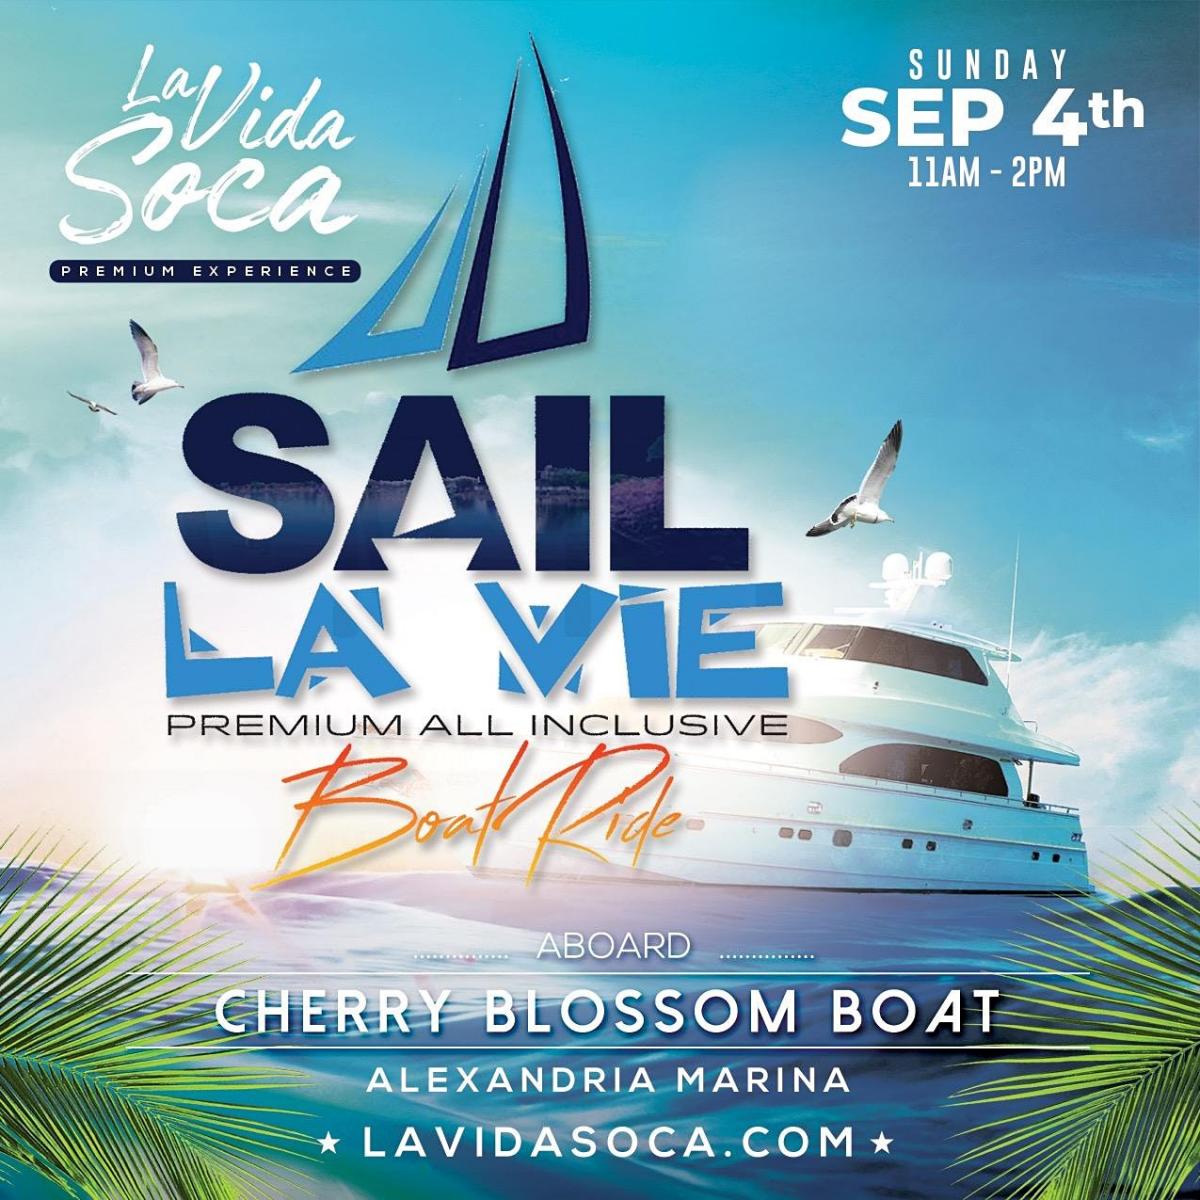 Sail La Vie flyer or graphic.